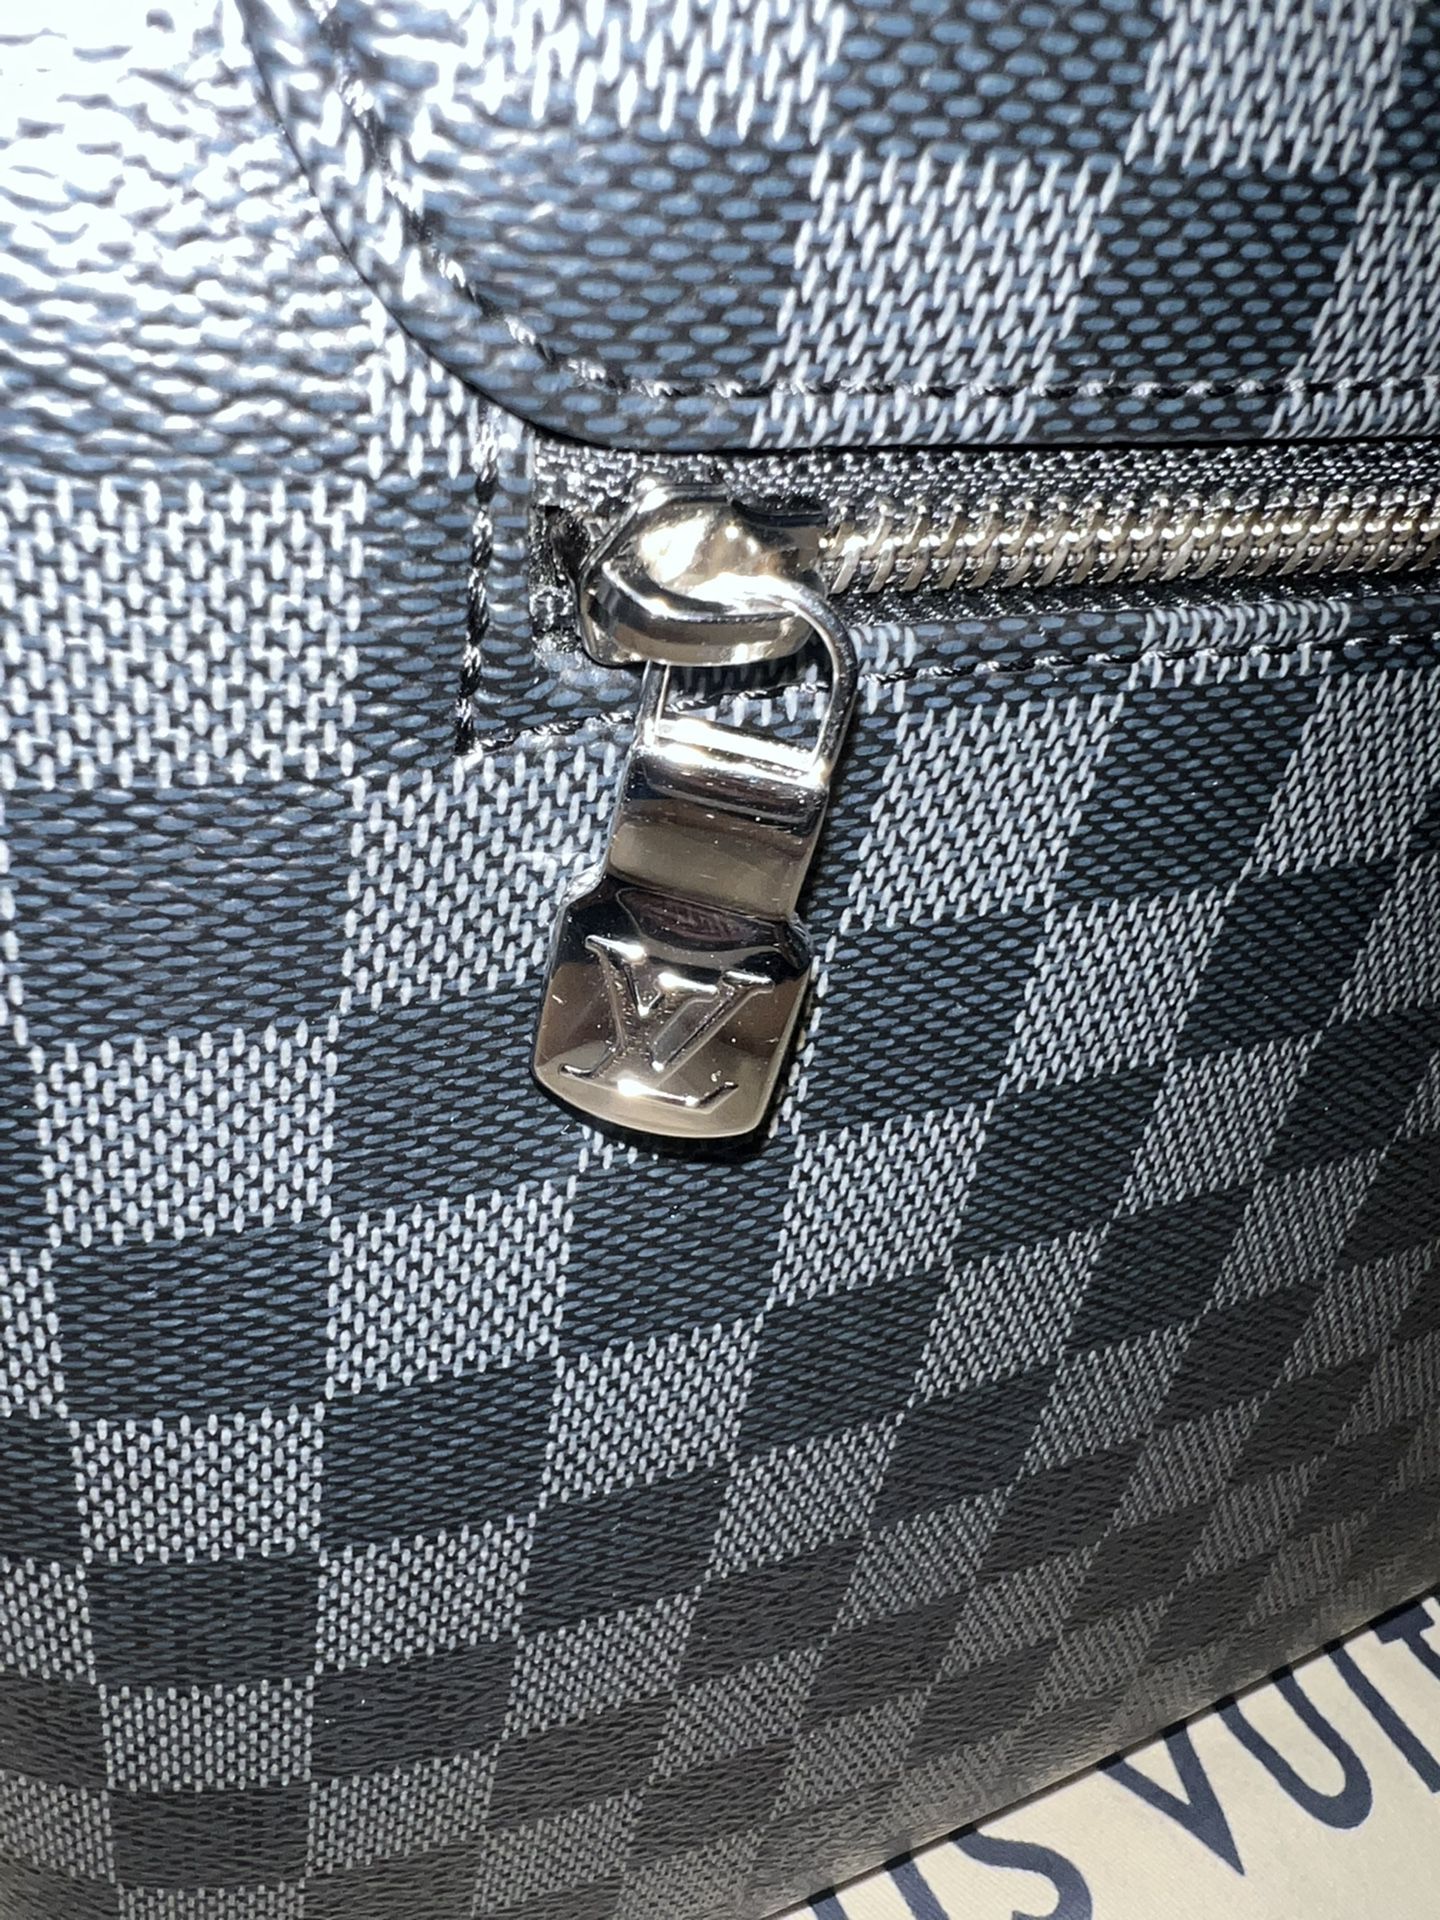 Authentic Louis Vuitton Segur bag for Sale in Danville, CA - OfferUp